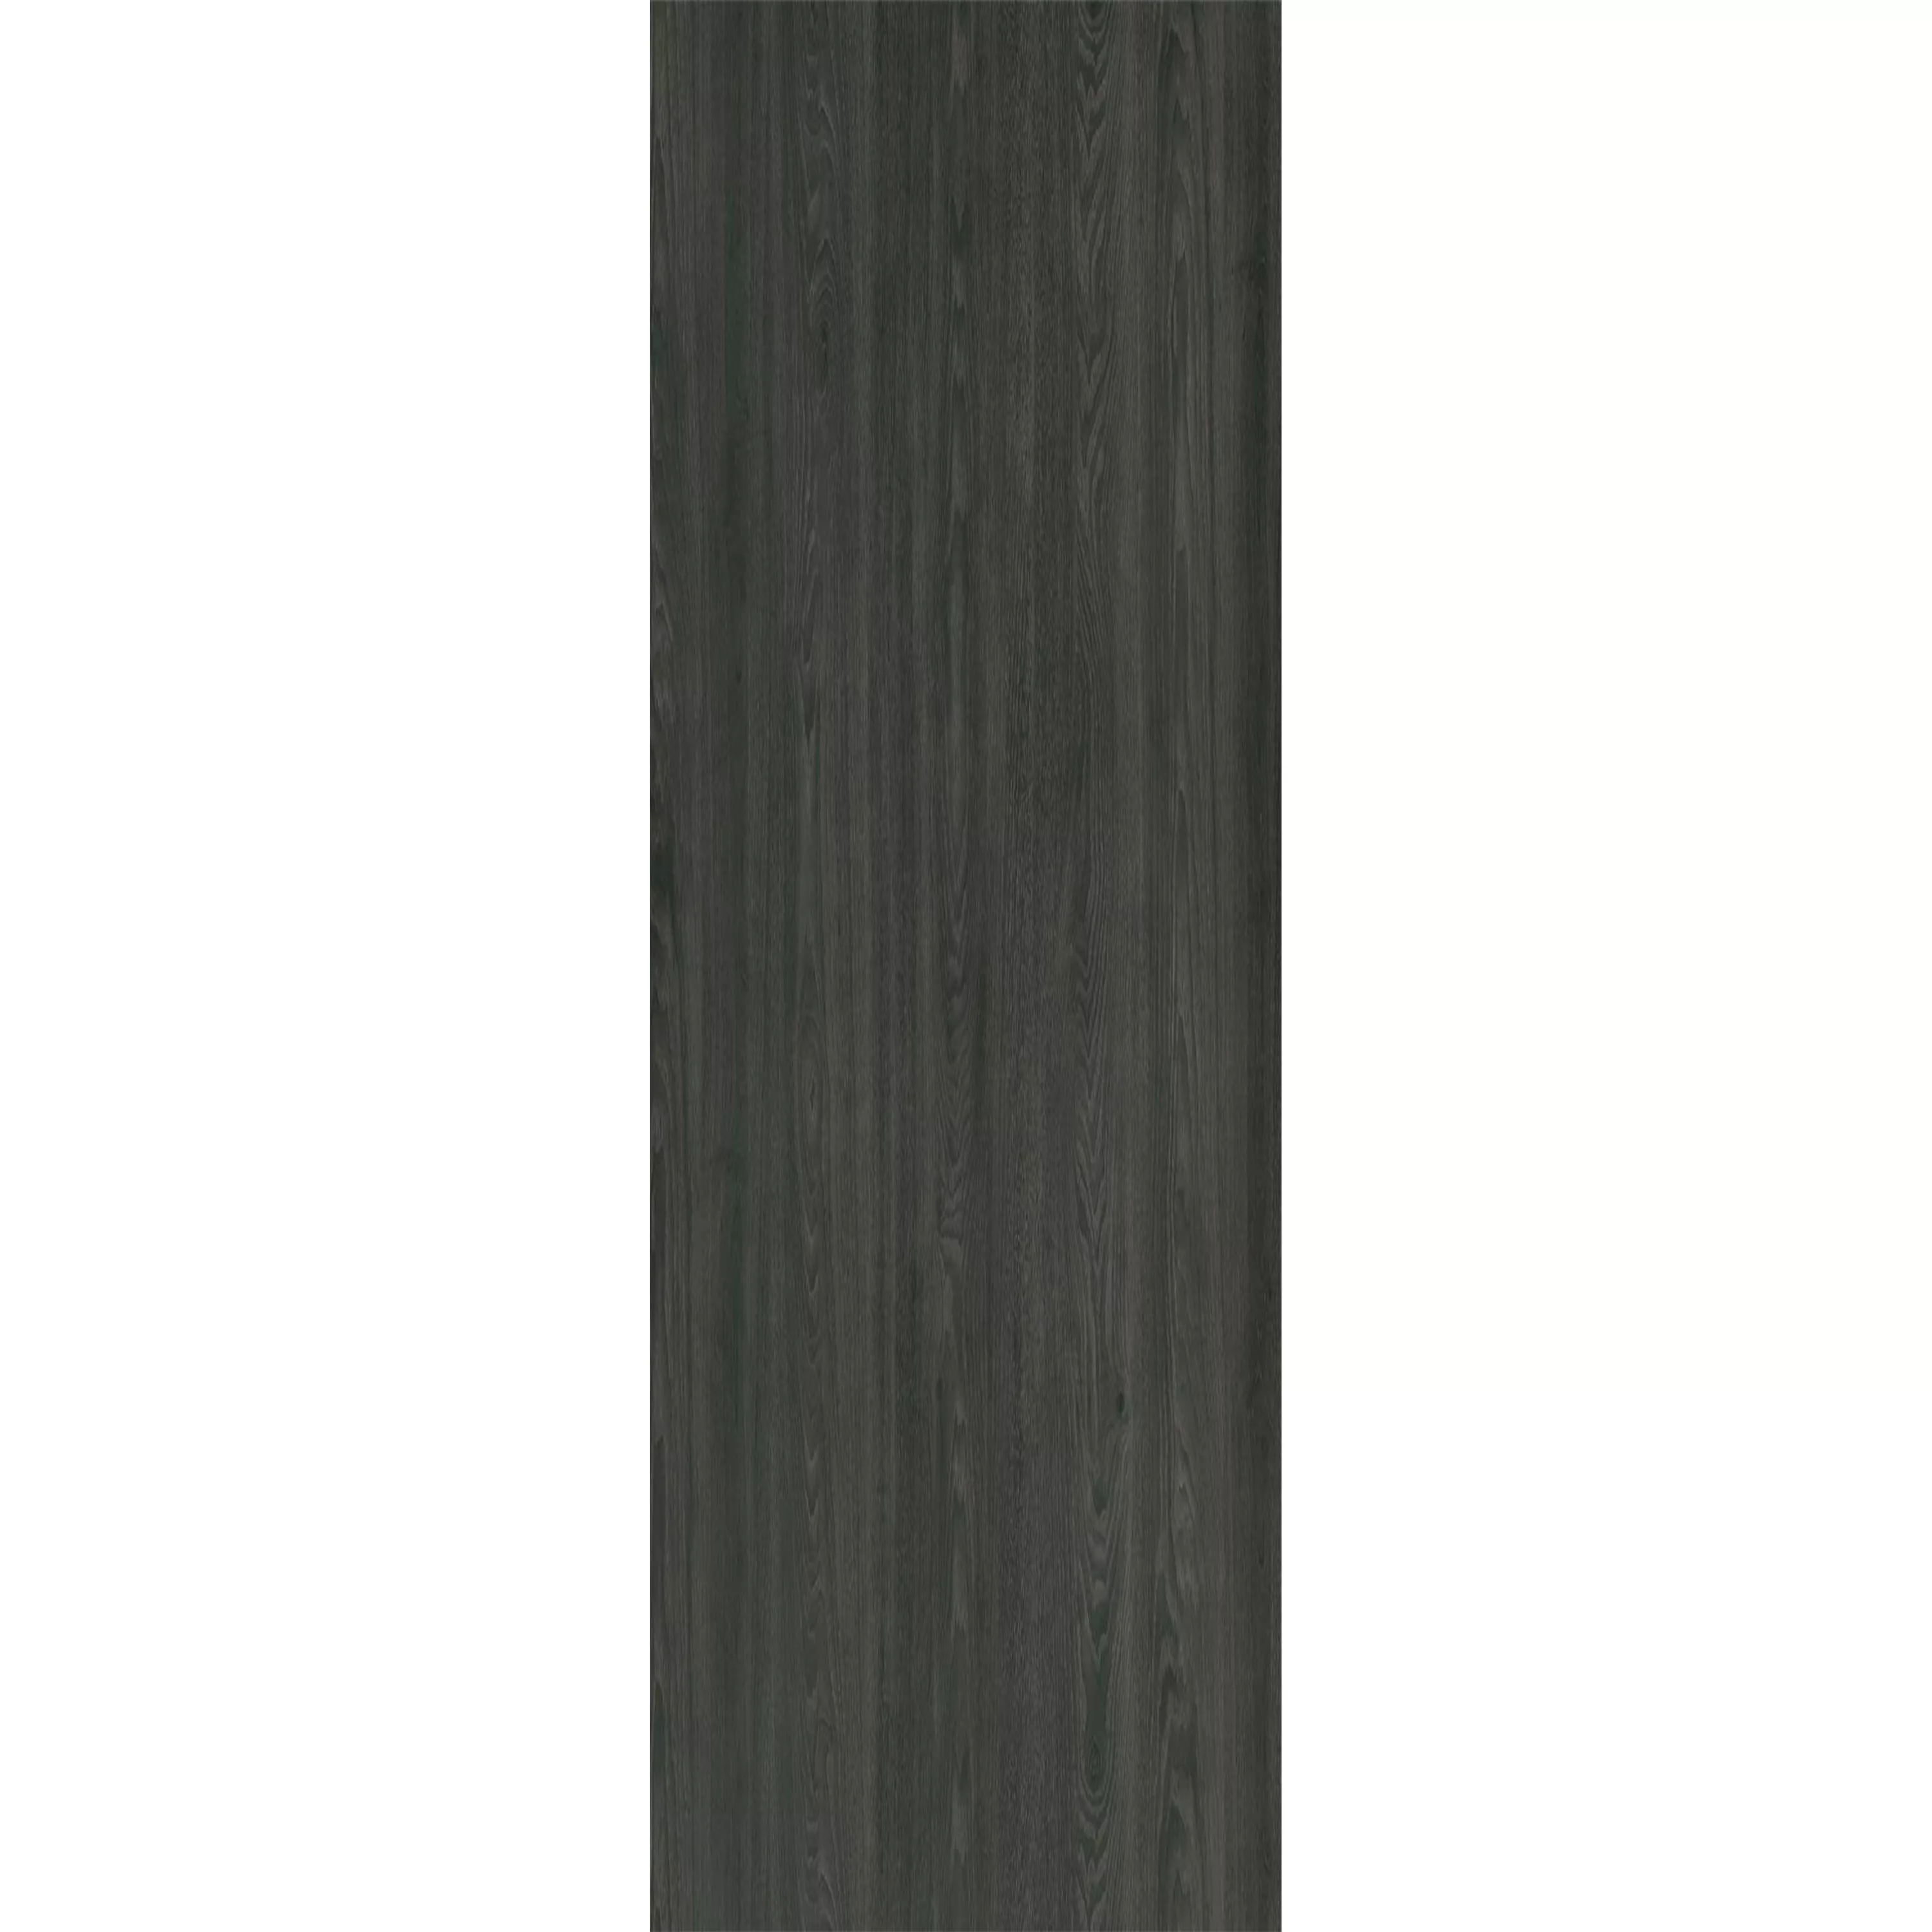 Vinyl vloertegels Klik Systeem Blackwood Antraciet 17,2x121cm